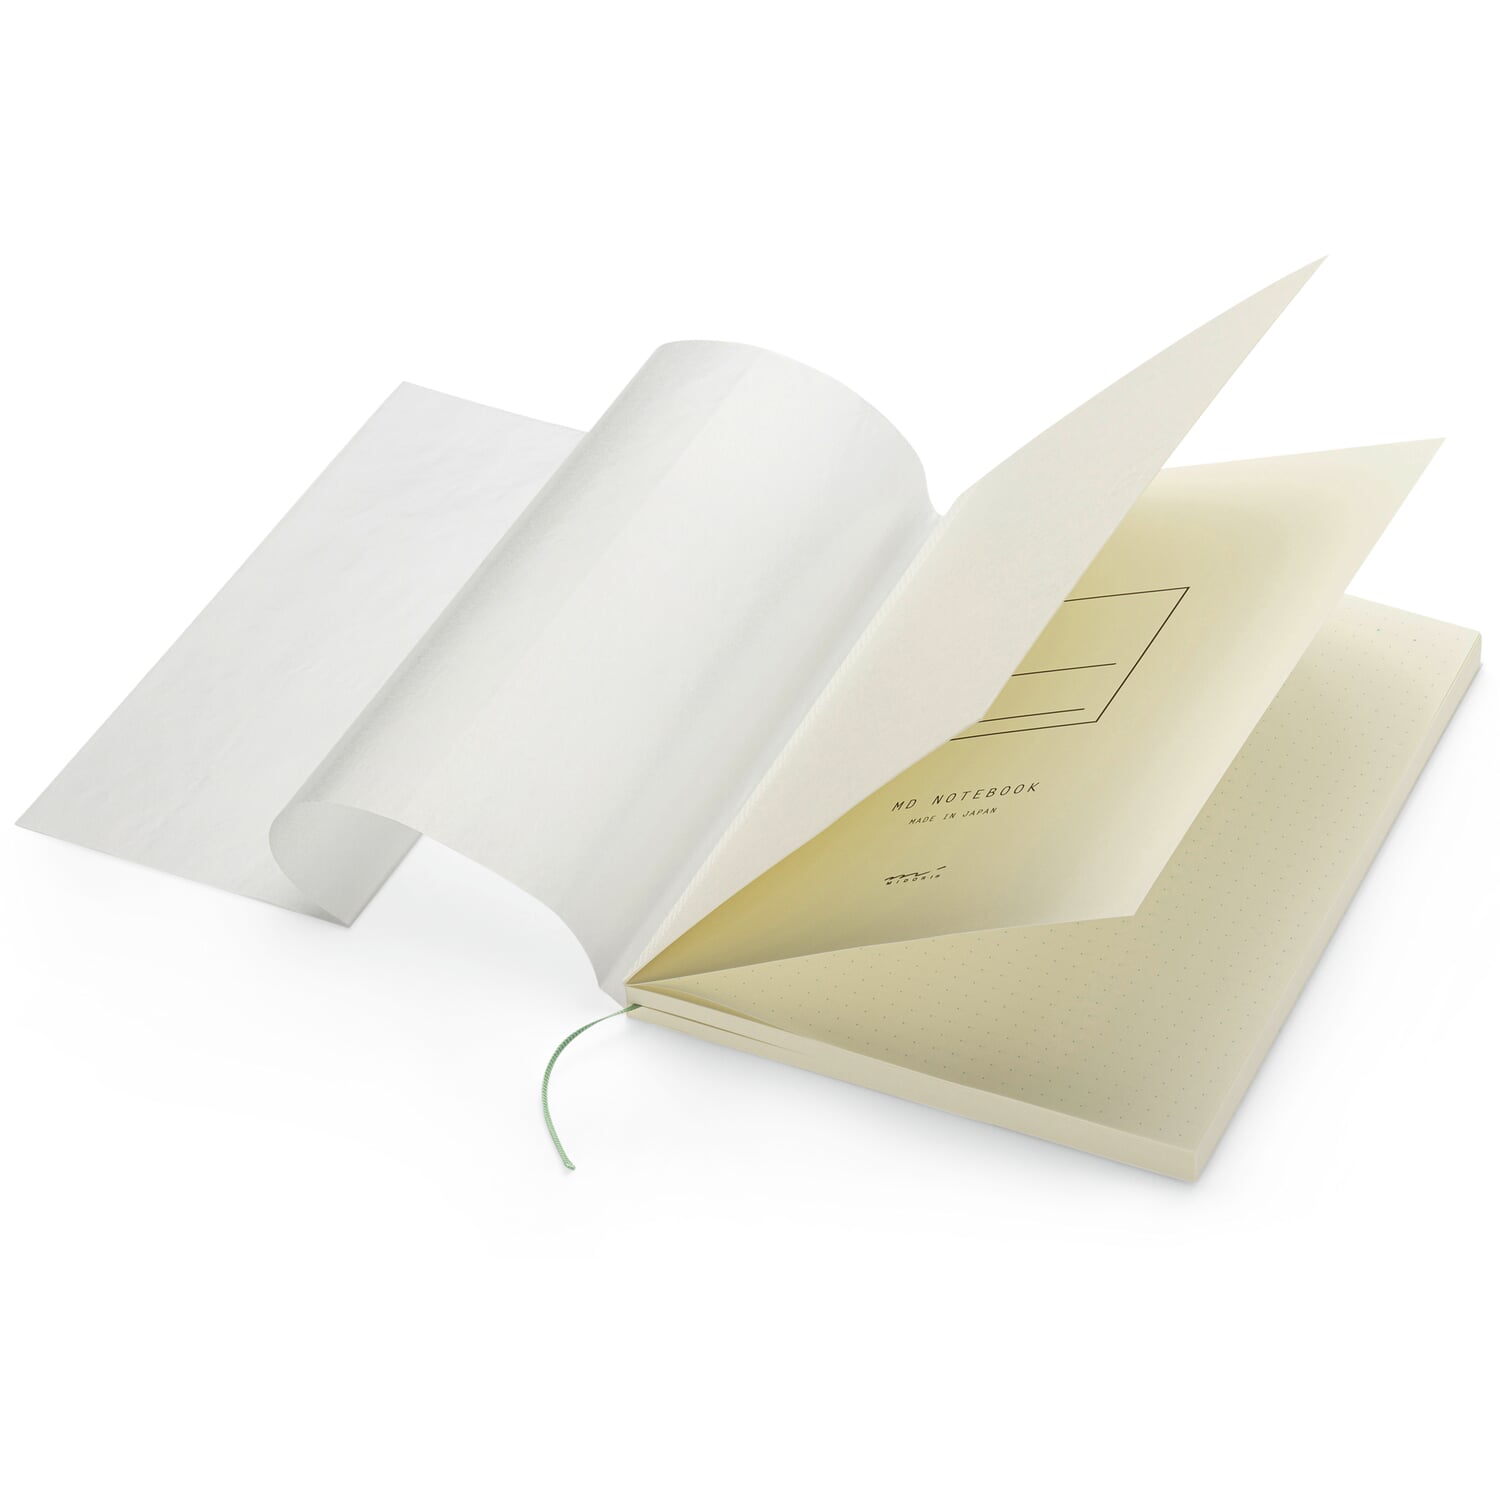 book binding gauze, book binding gauze Suppliers and Manufacturers